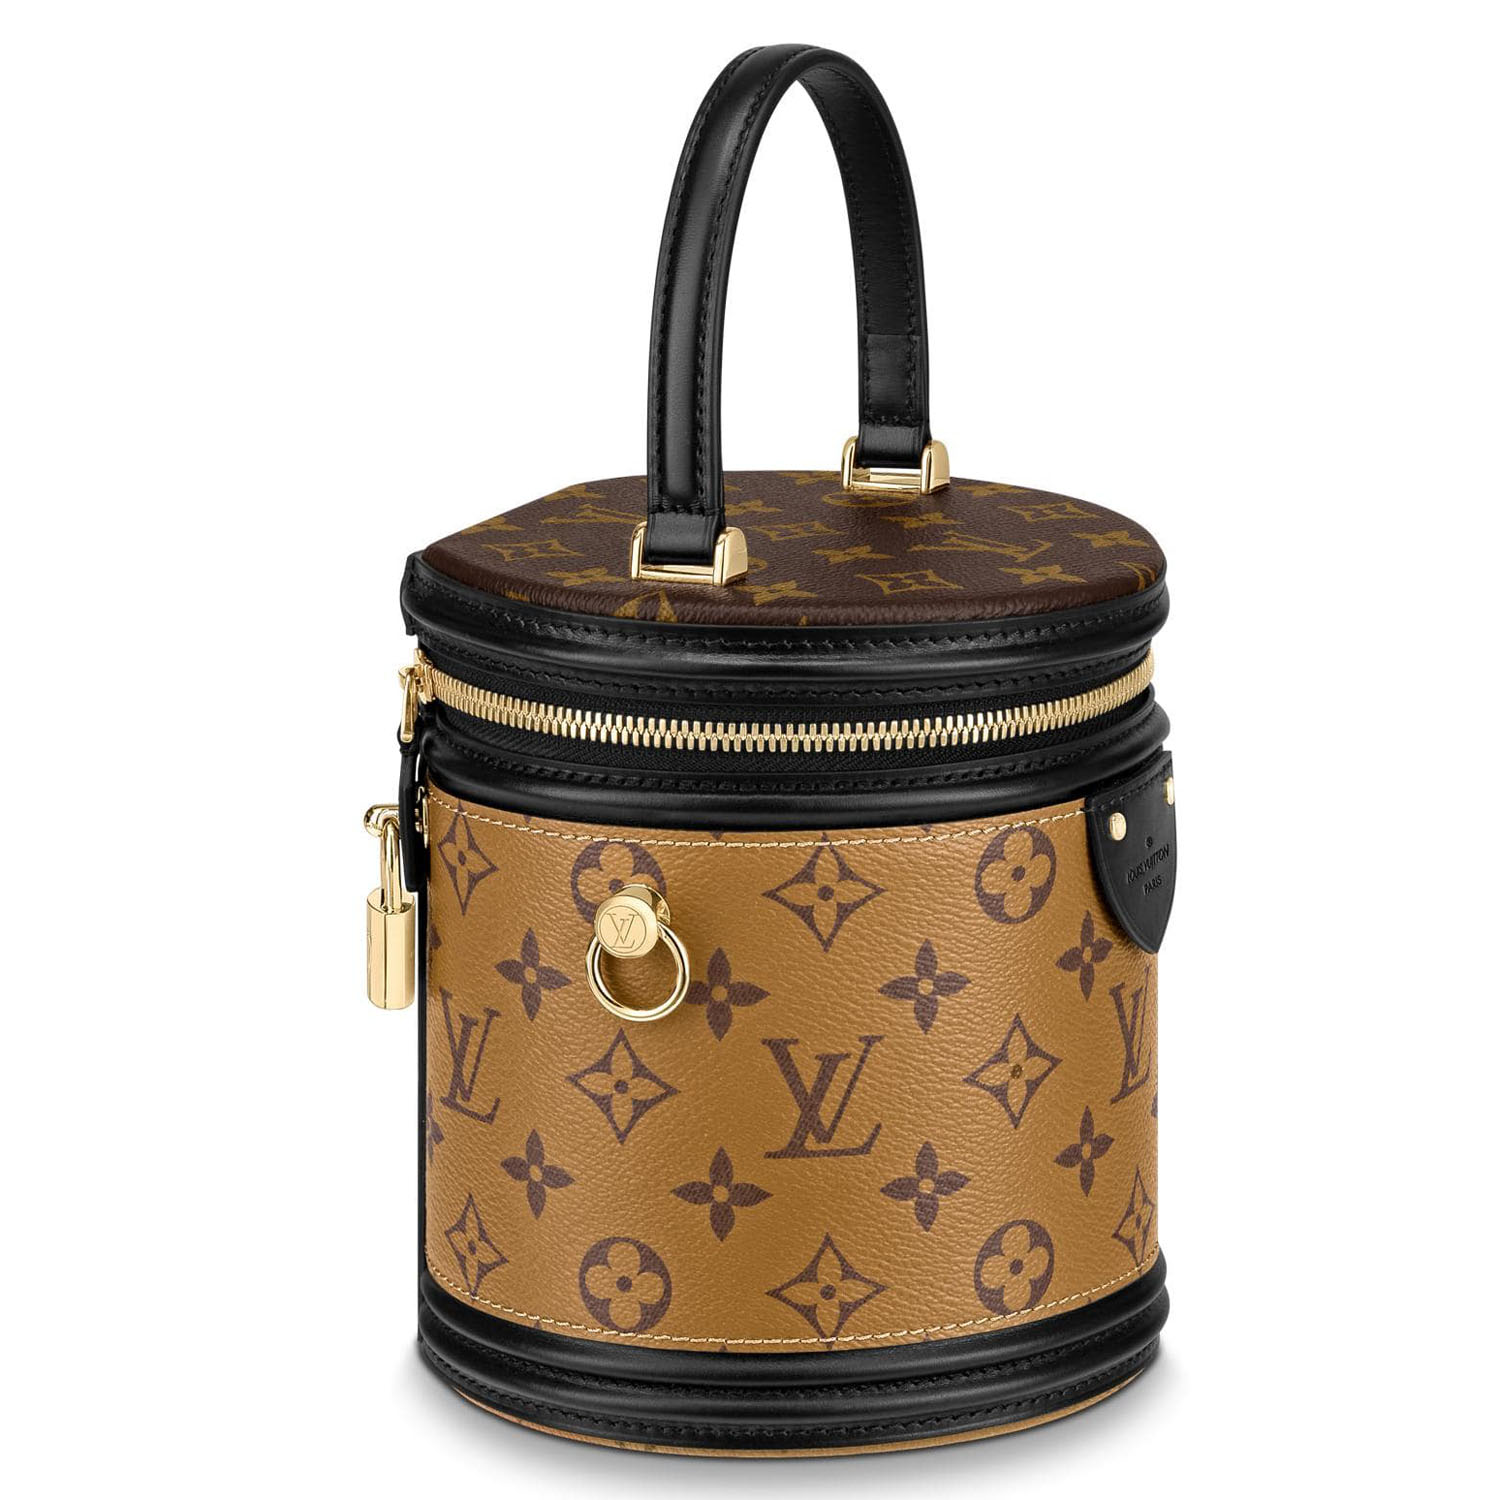 Louis Vuitton Cannes Bag of Reverse Monogram Canvas with Golden Brass  Hardware  Handbags  Accessories Online  Ecommerce Retail  Sothebys